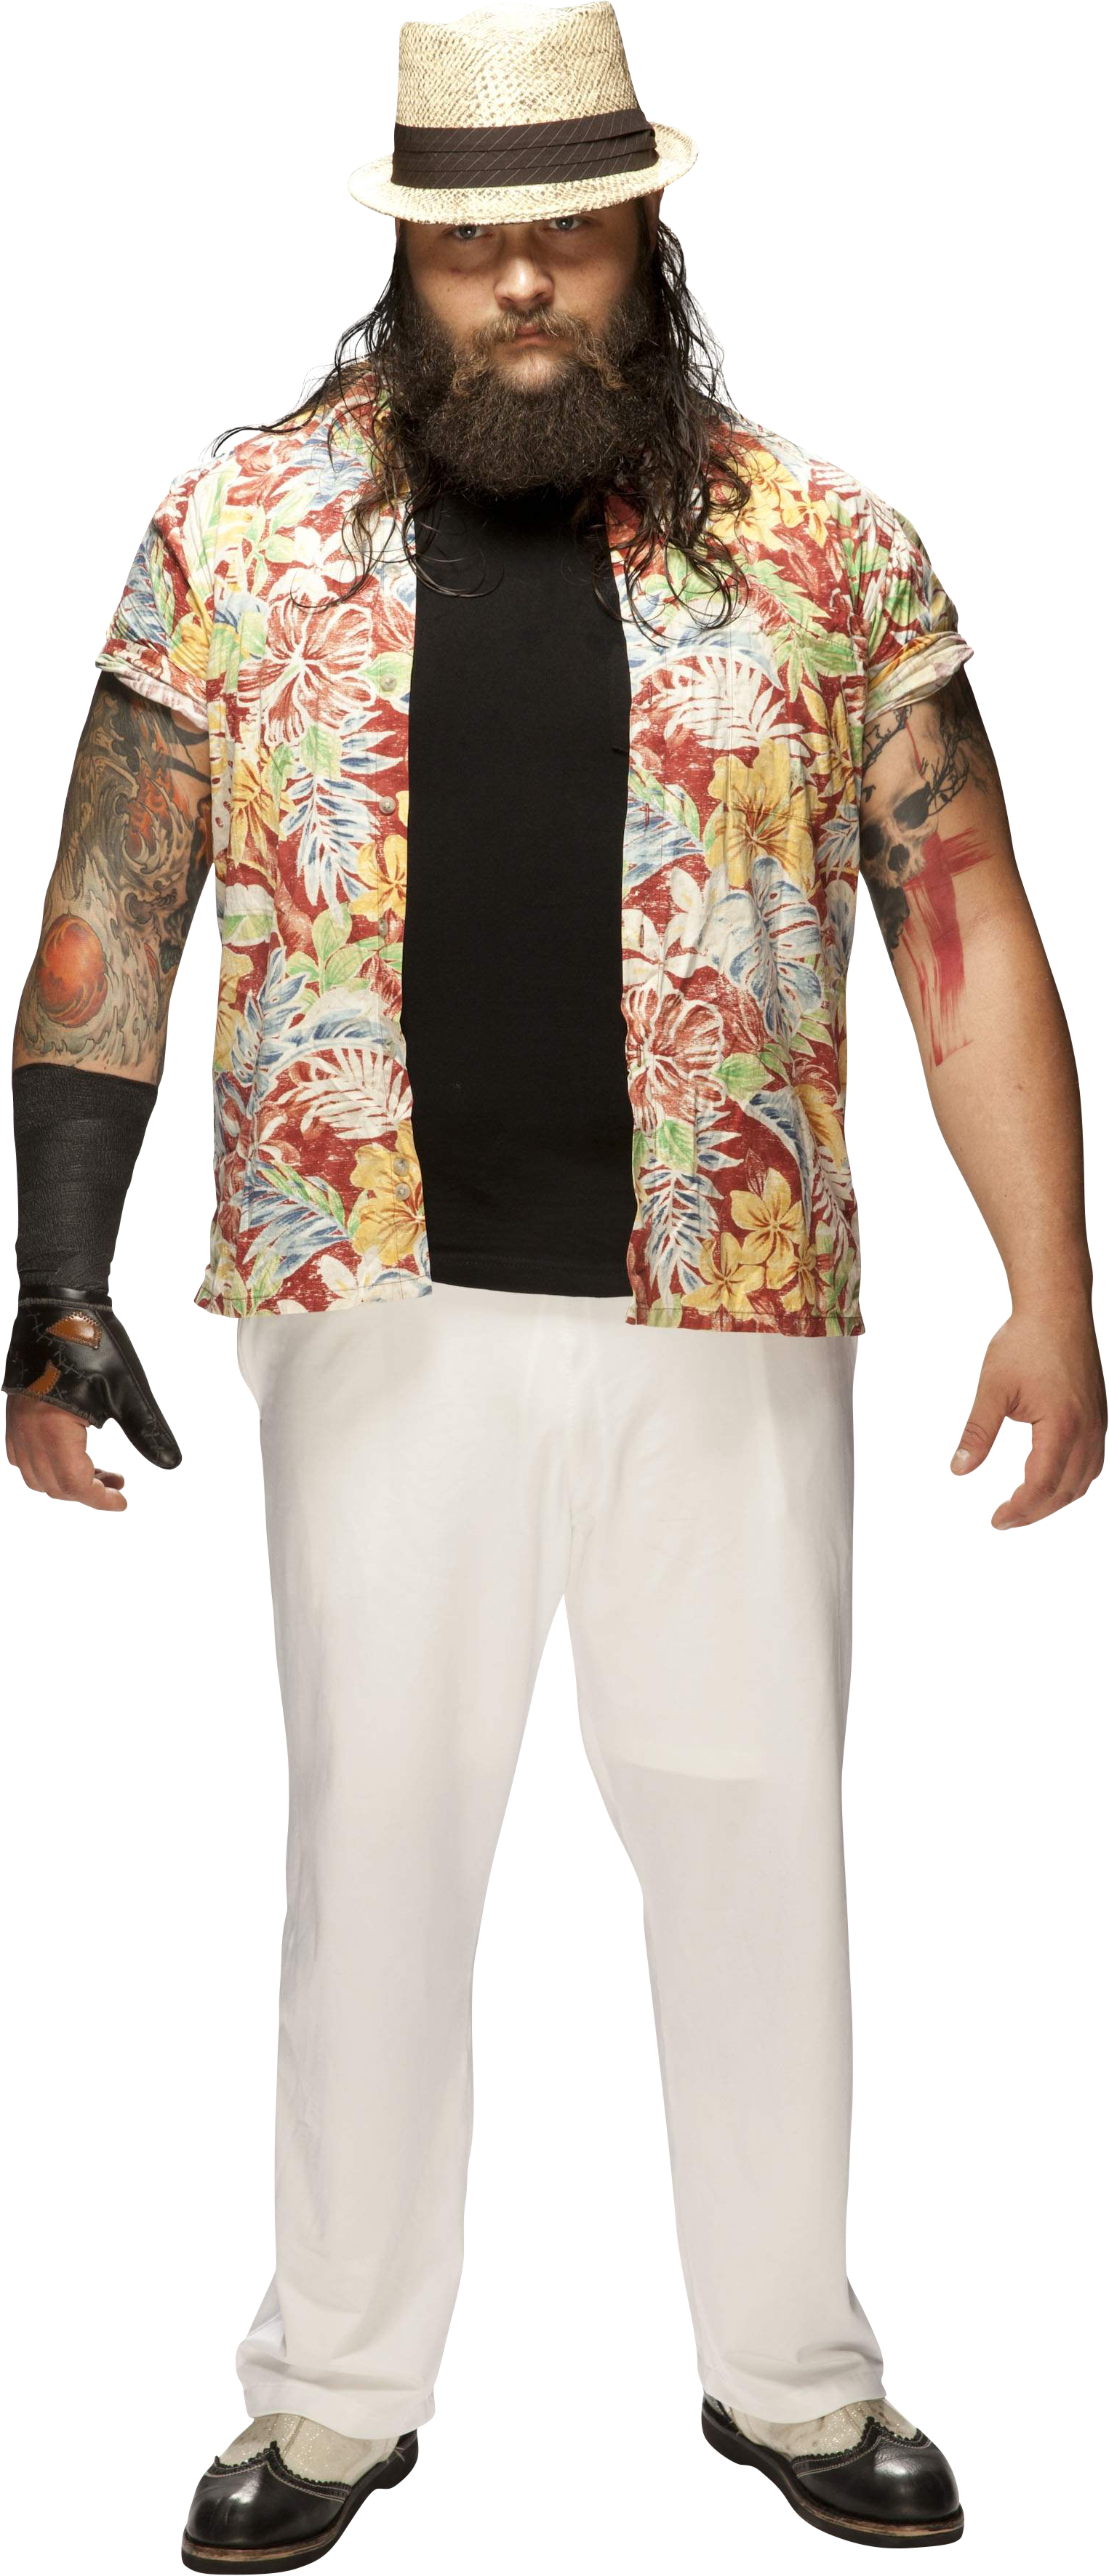 Bray Wyatt Transparent Image